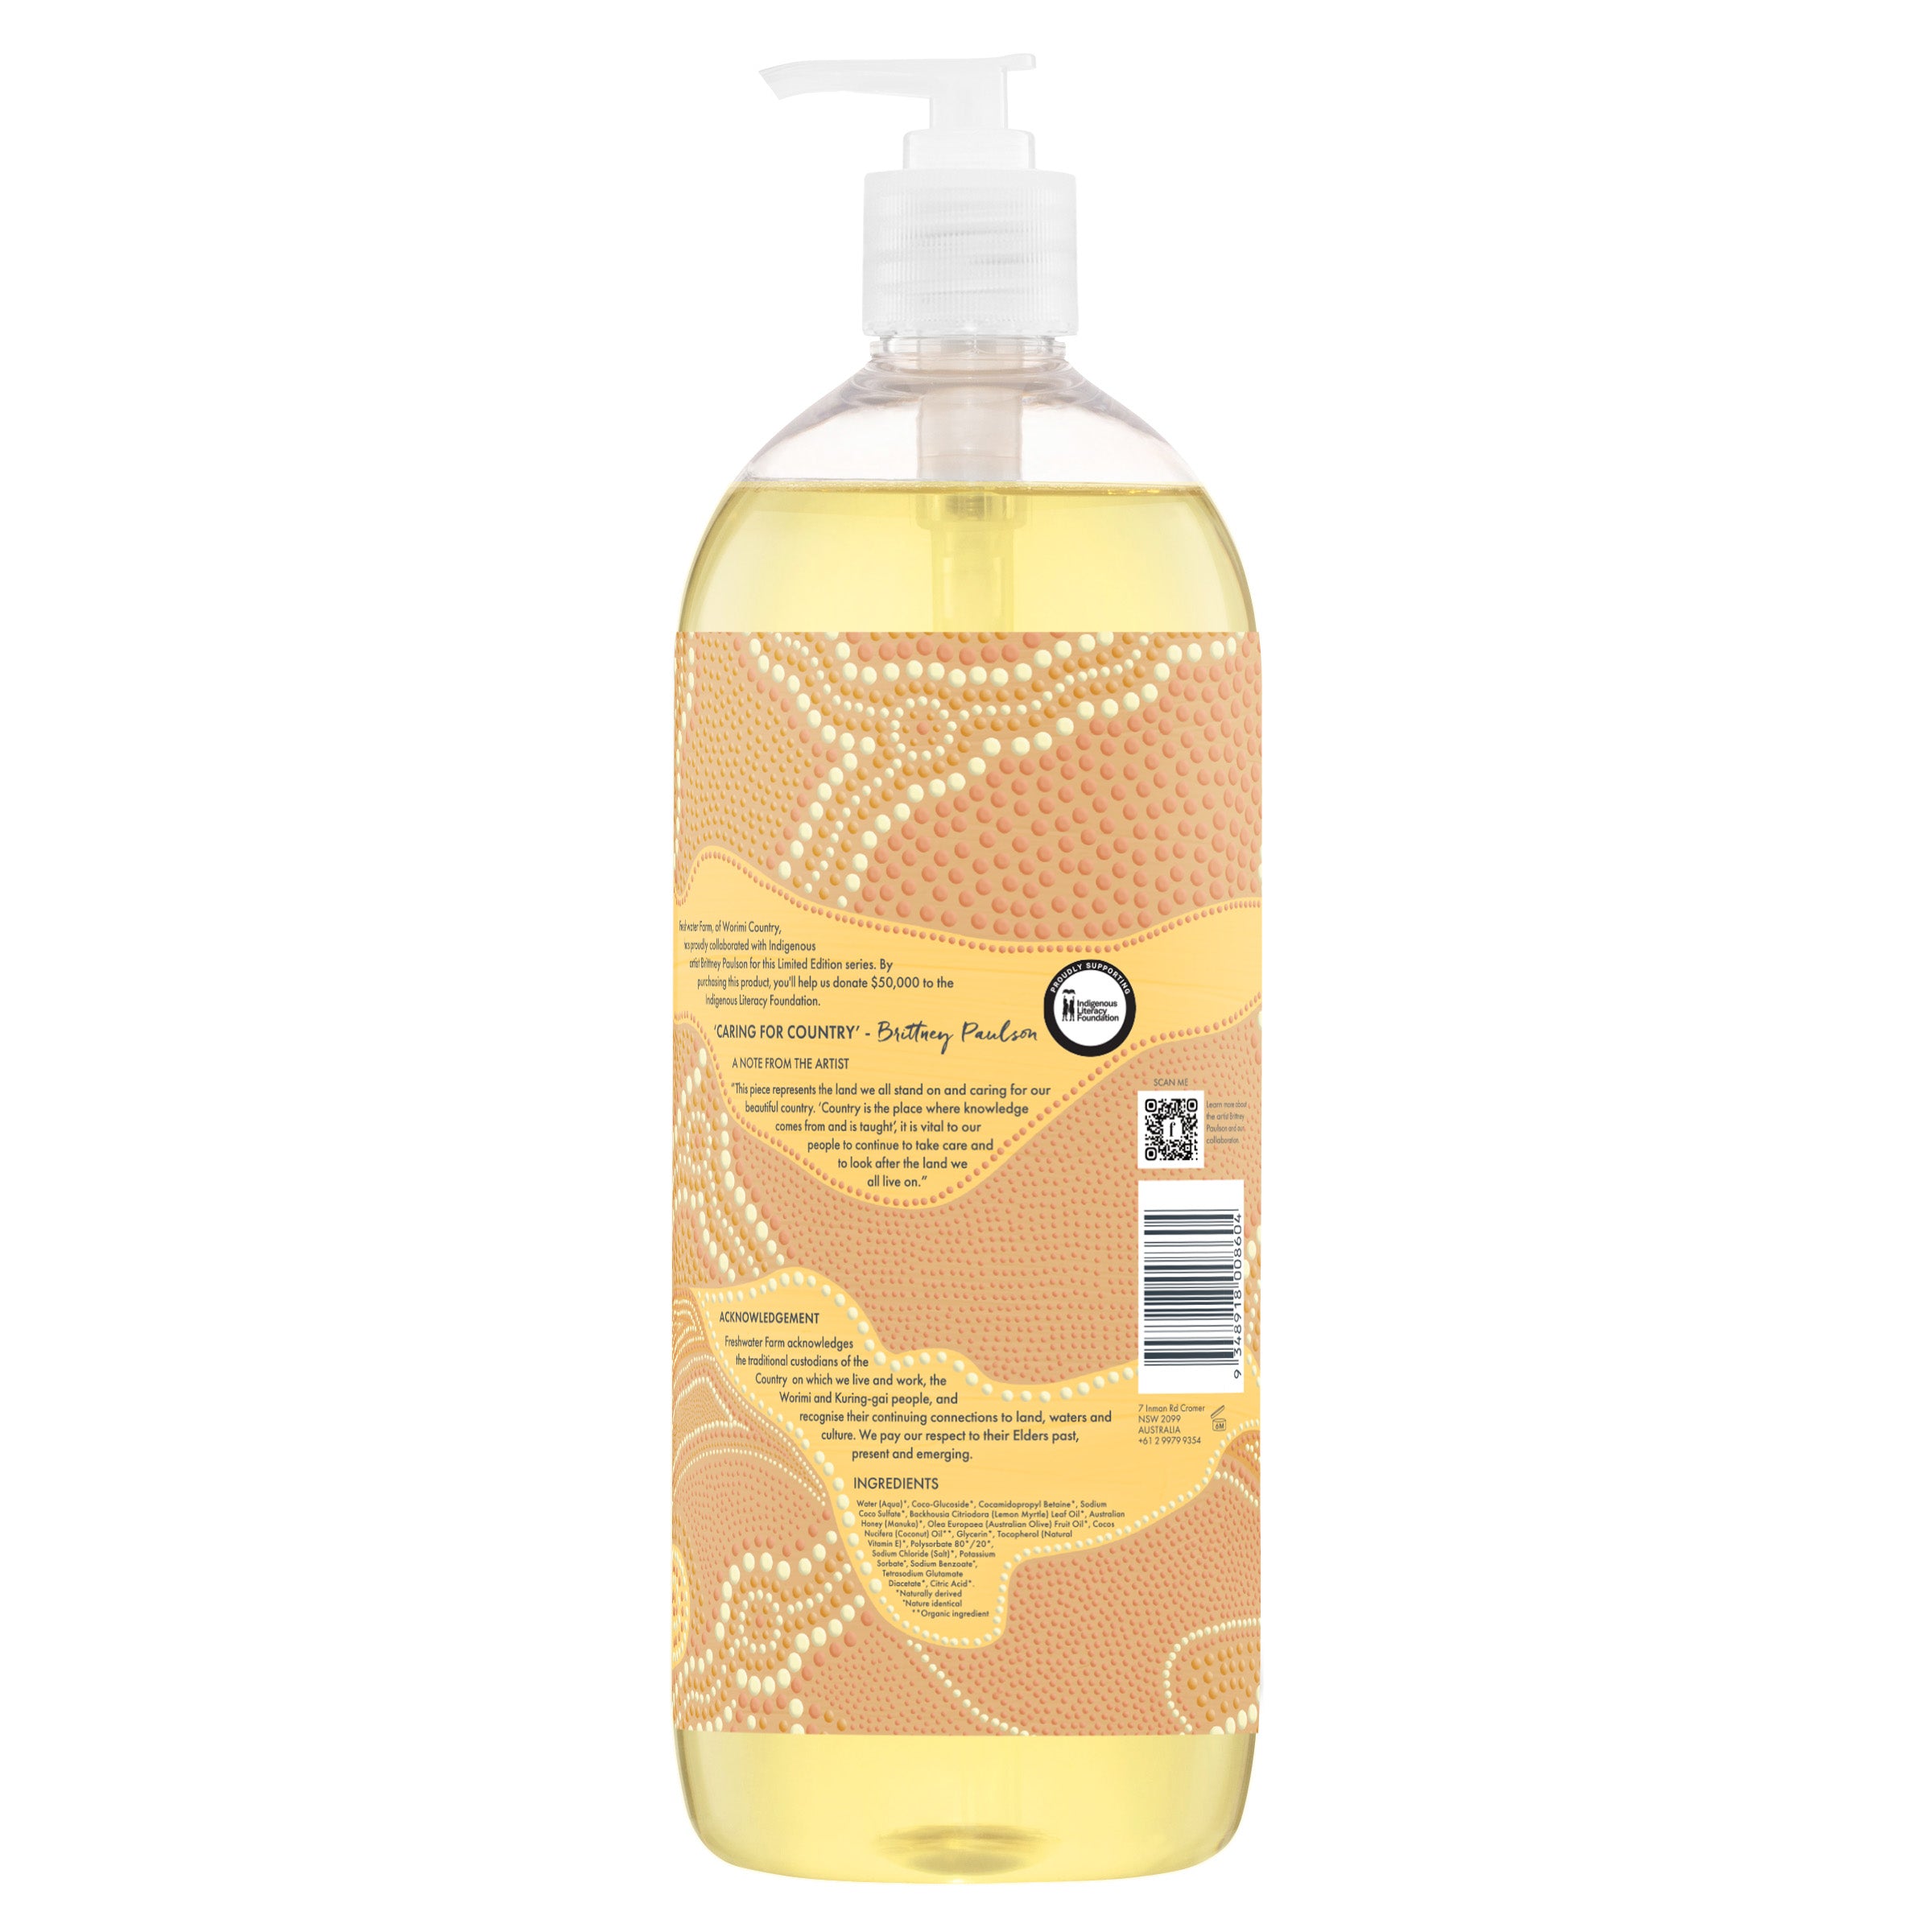 LIMITED EDITION BODY WASH | Soothing Lemon Myrtle Oil + Manuka Honey 1 Litre